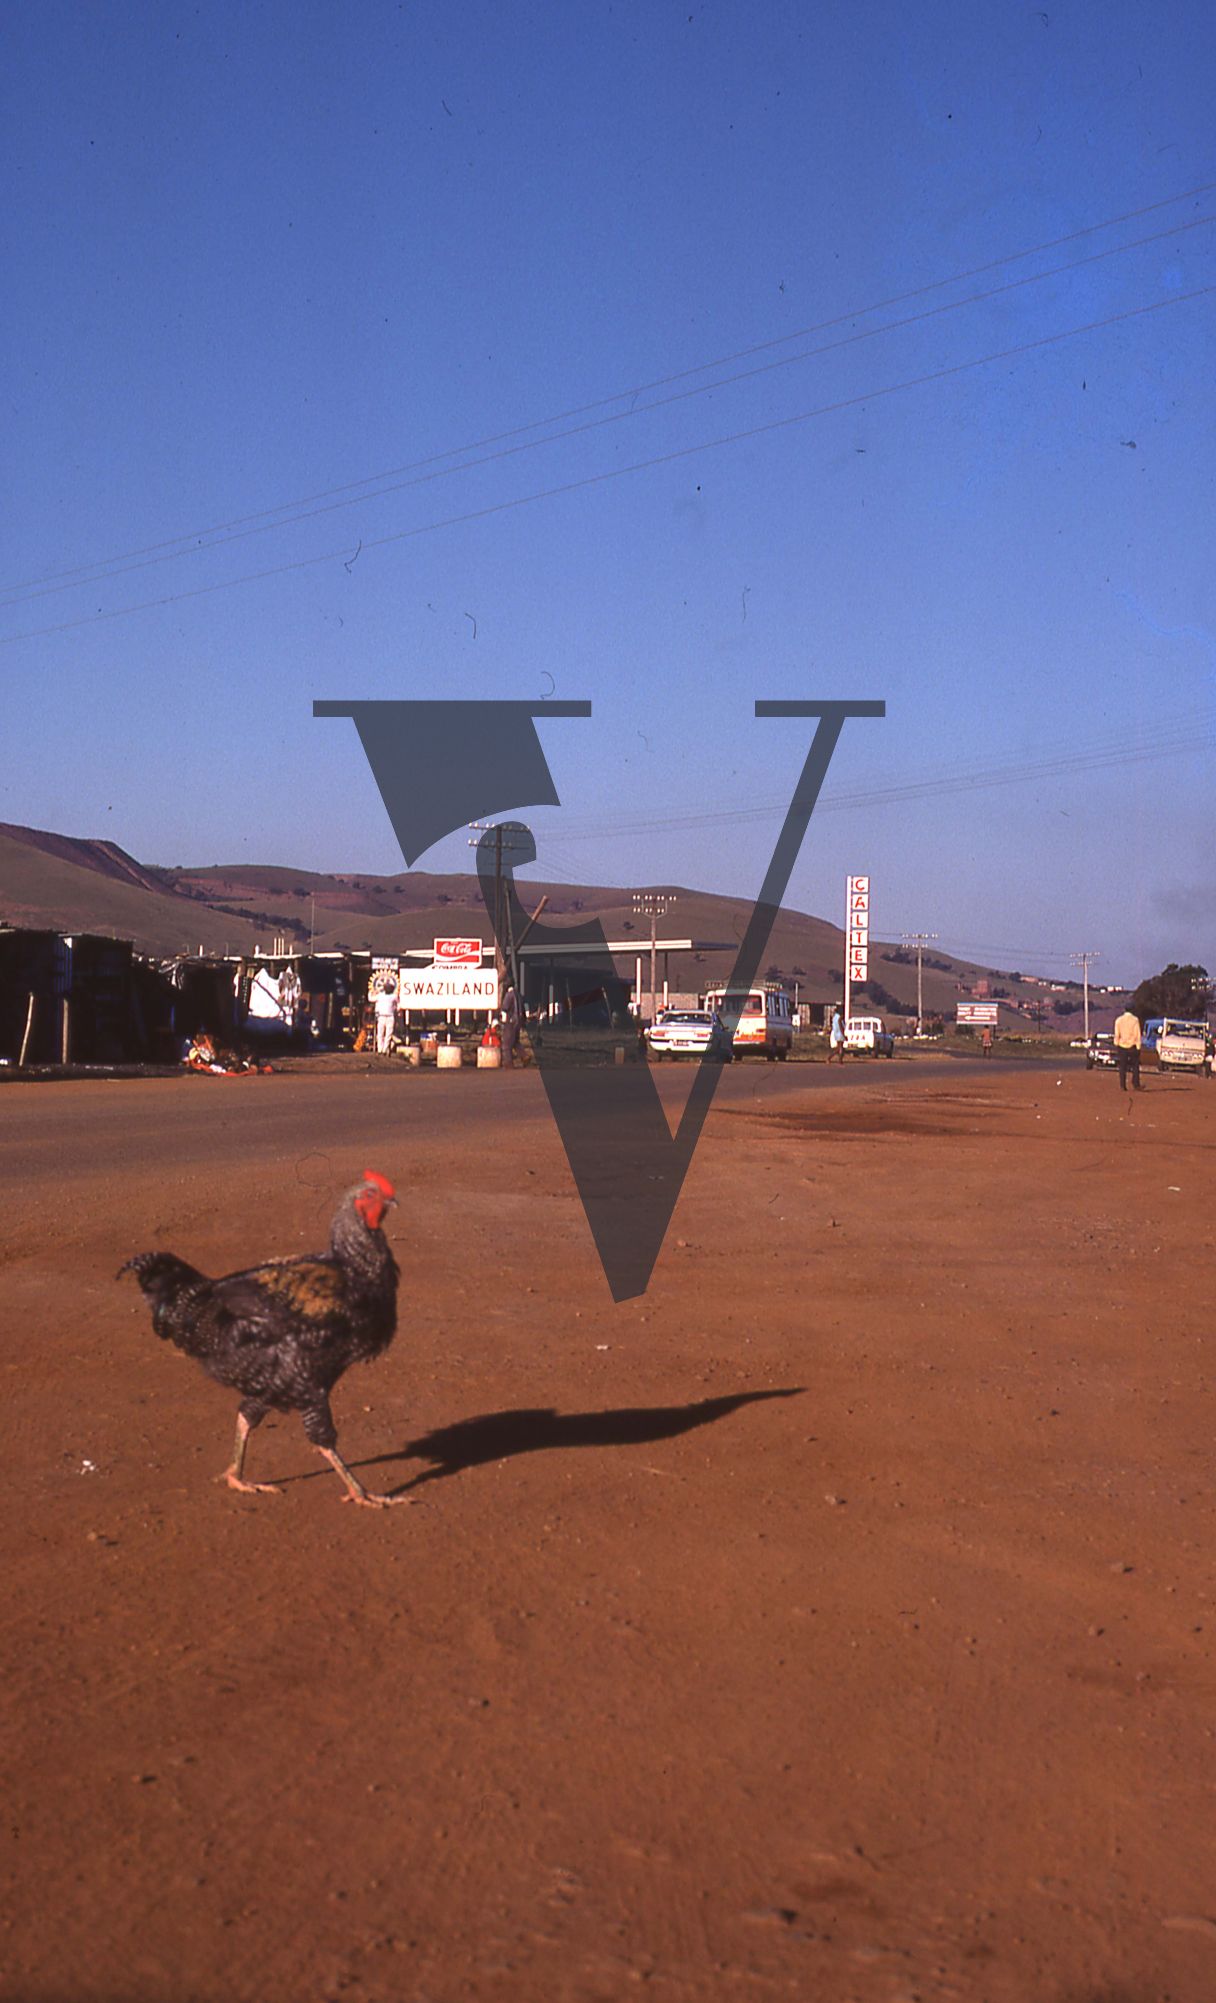 Eswatini, (formerly Swaziland), street scene, cockerel, signage, Caltex station.